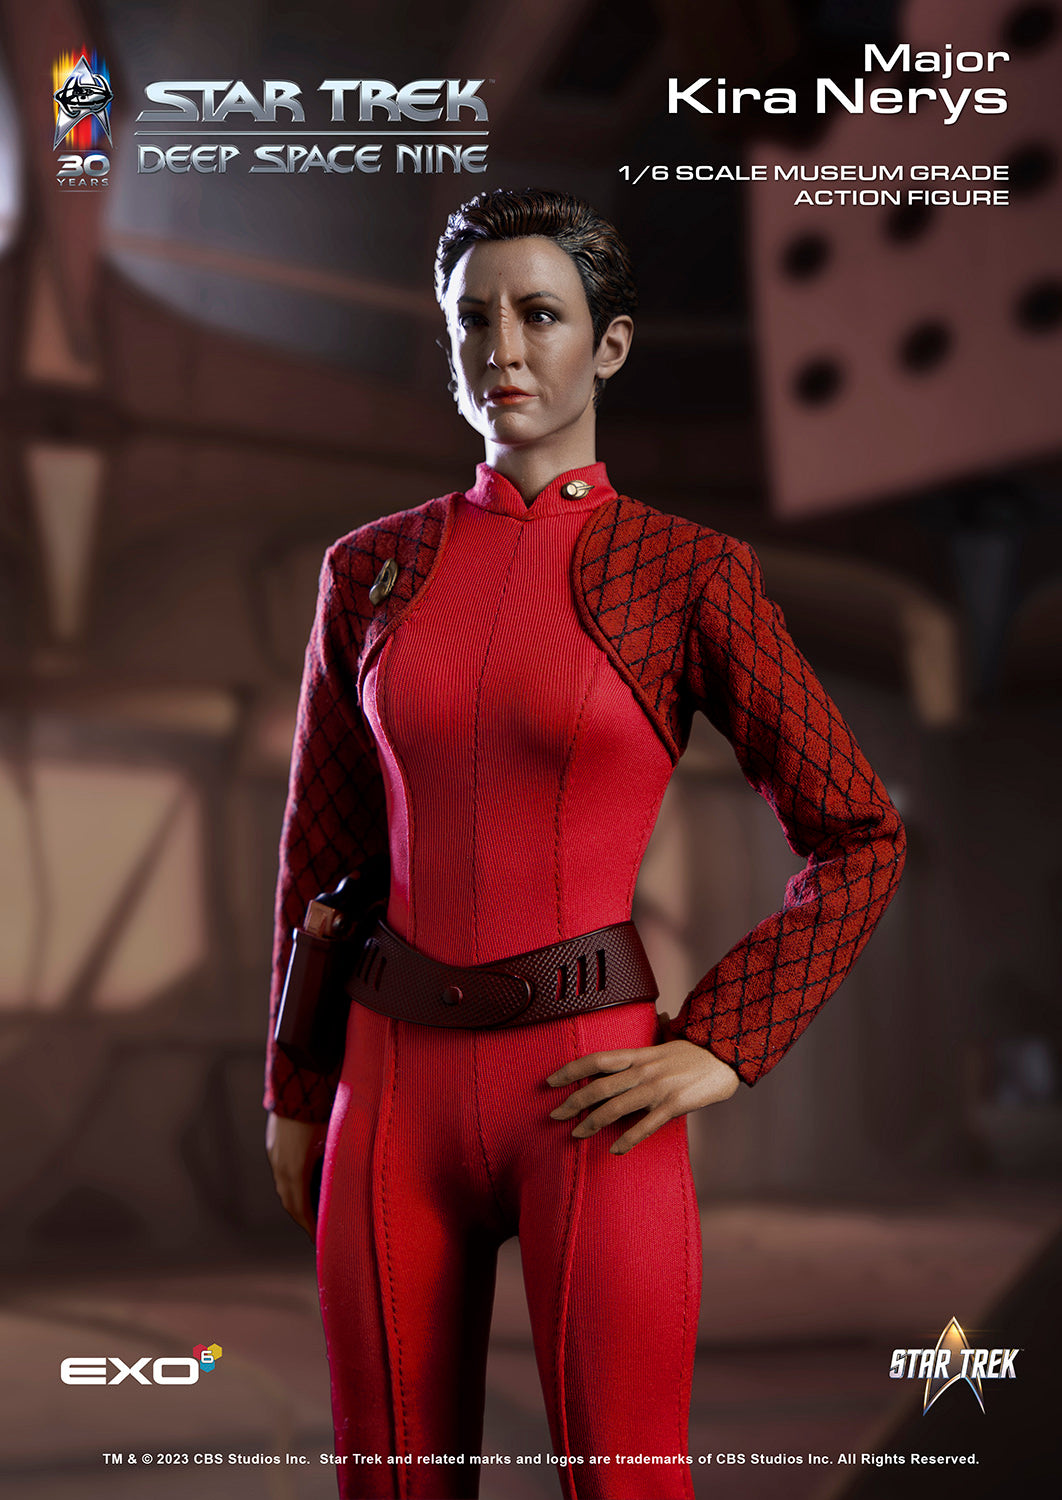 Star Trek Deep Space Nine Kira Nerys 1/6 Scale Figure